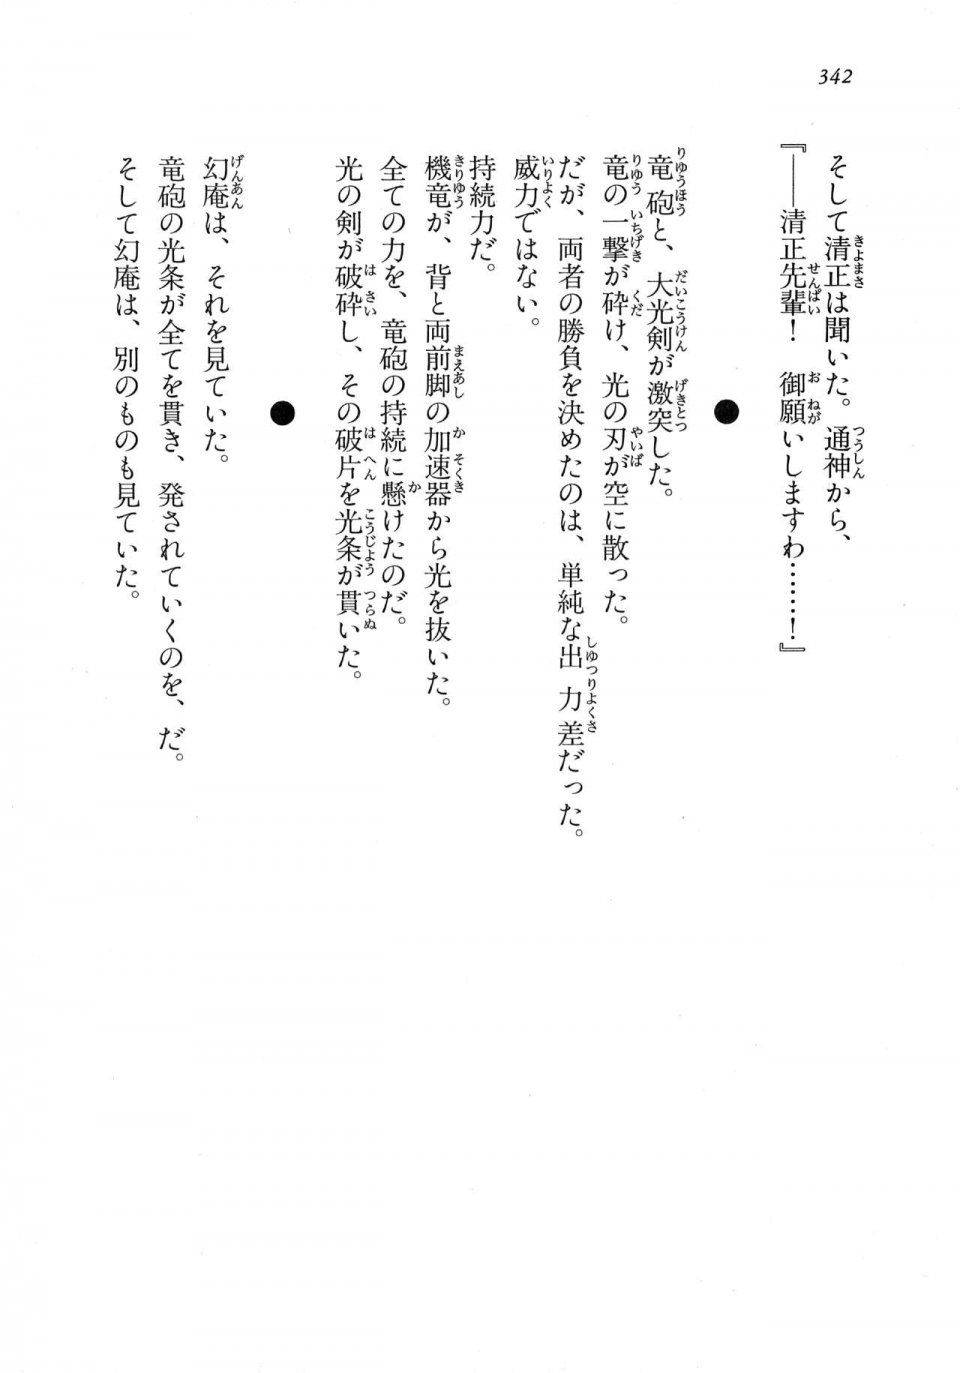 Kyoukai Senjou no Horizon LN Vol 18(7C) Part 1 - Photo #342